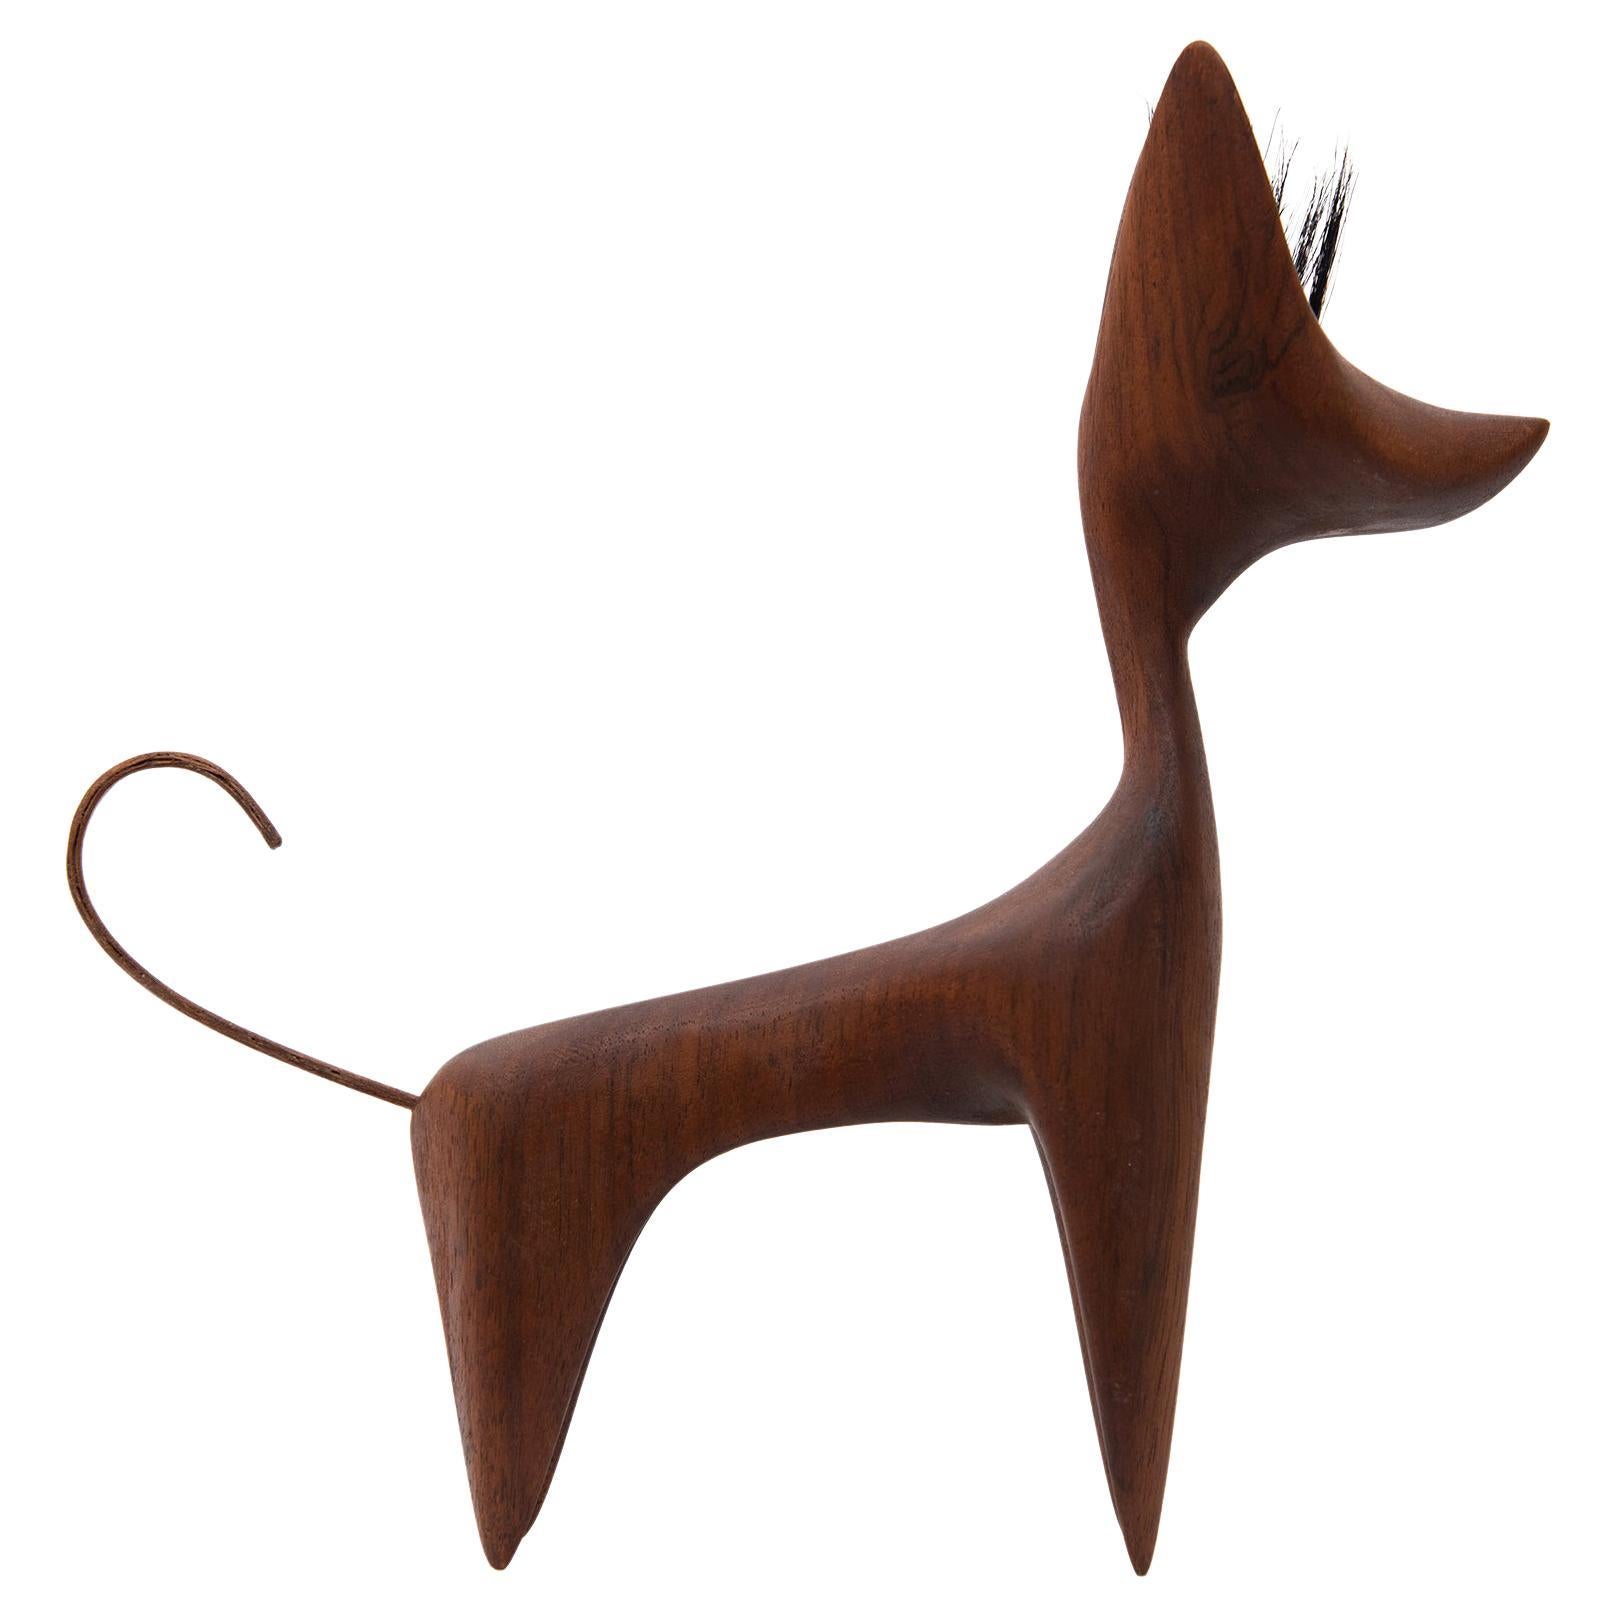 Lola by Design VA . Xoloitzcuintle Wood Sculpture For Sale